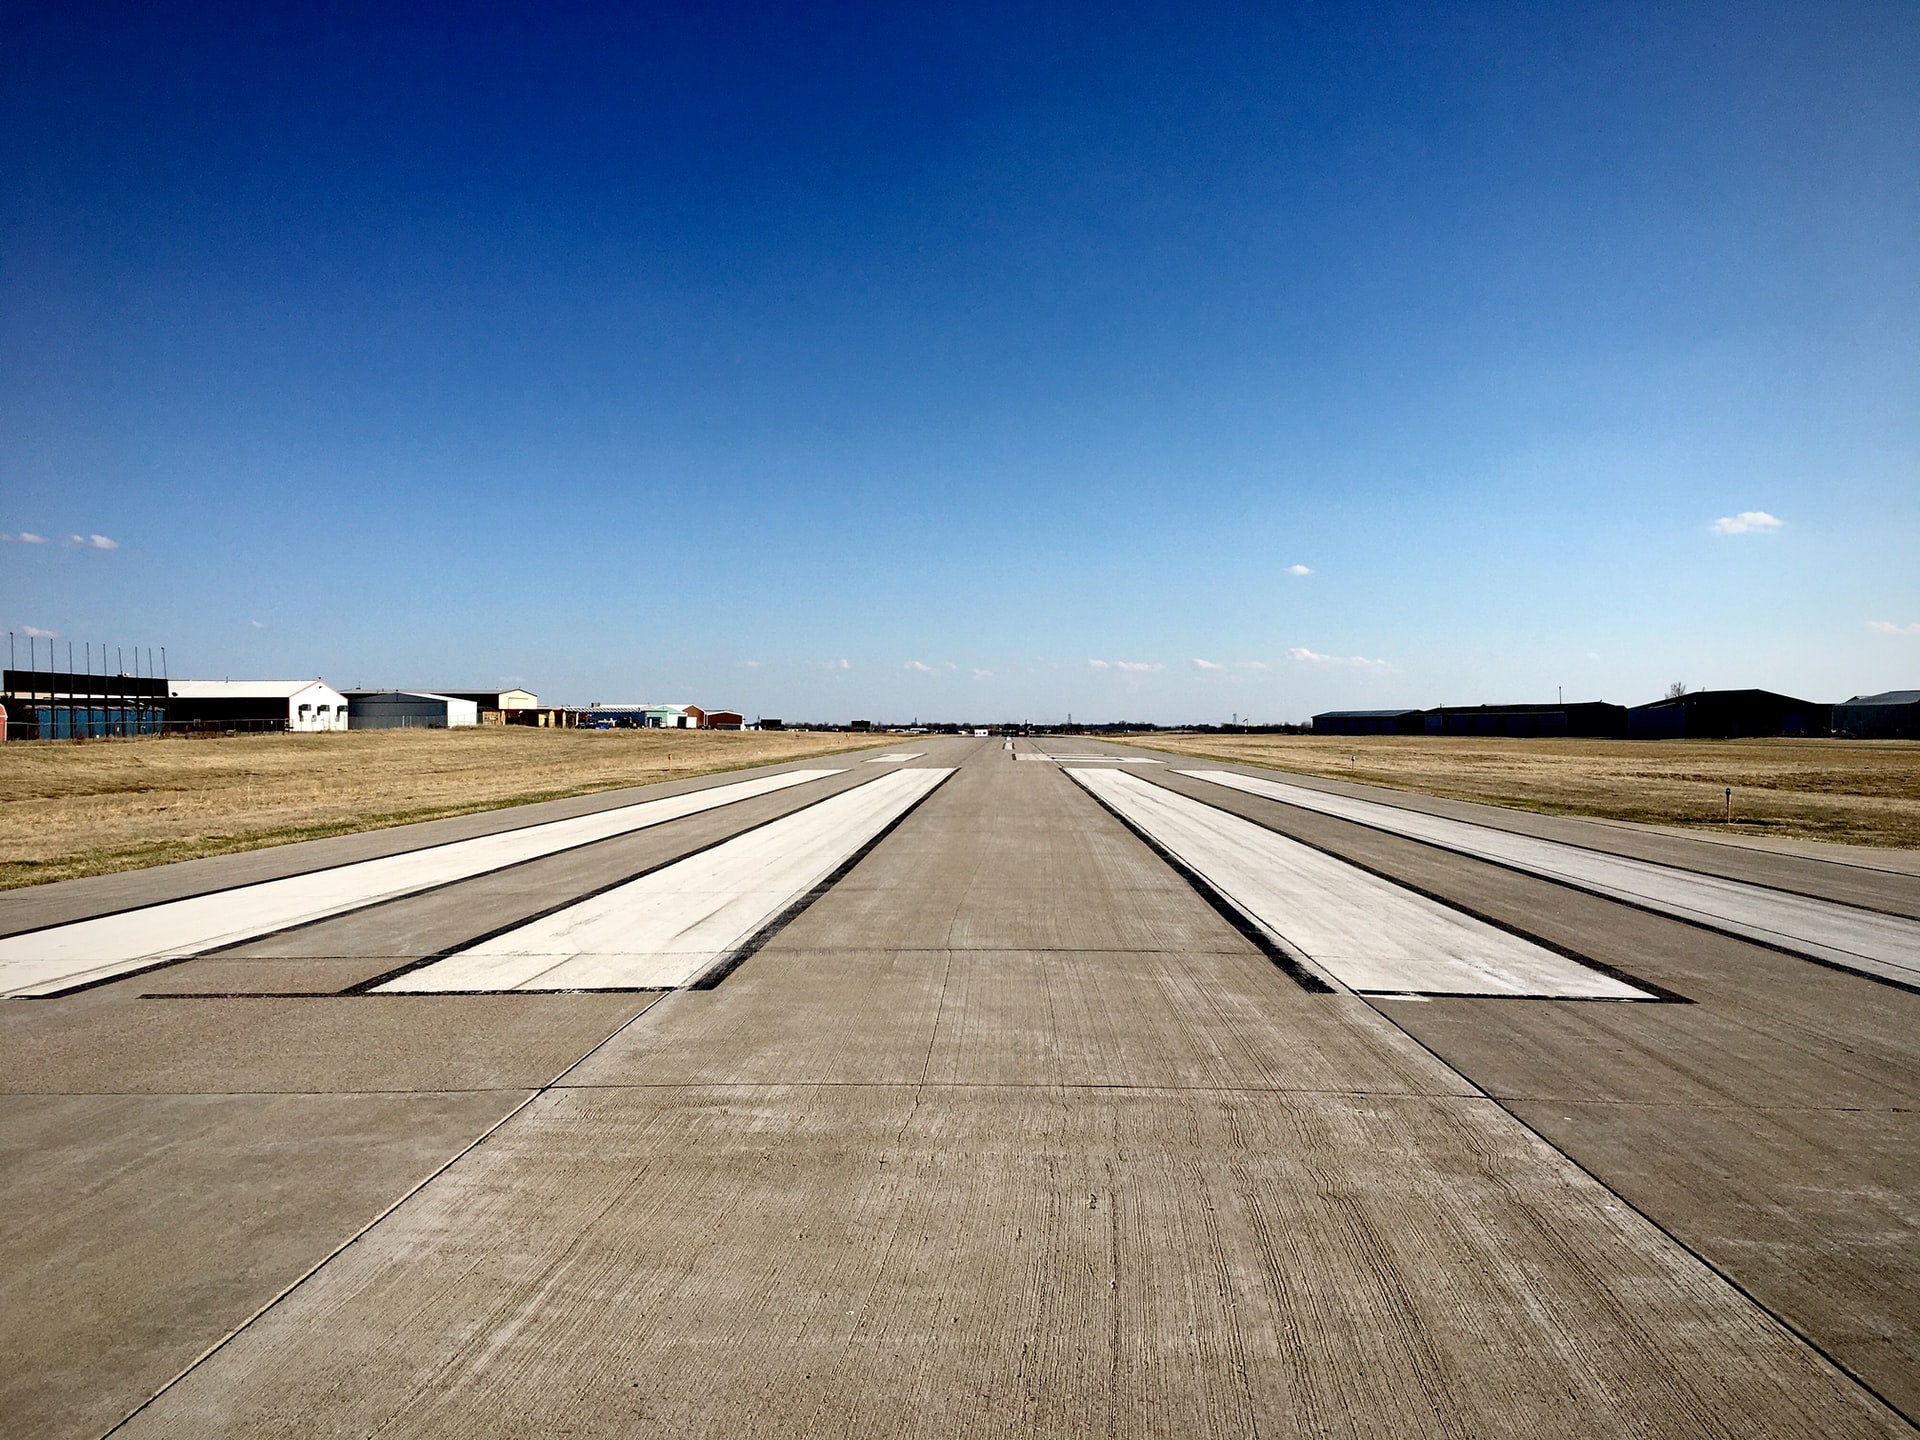 A photo of a runway by Will Drzycimski on Unsplash